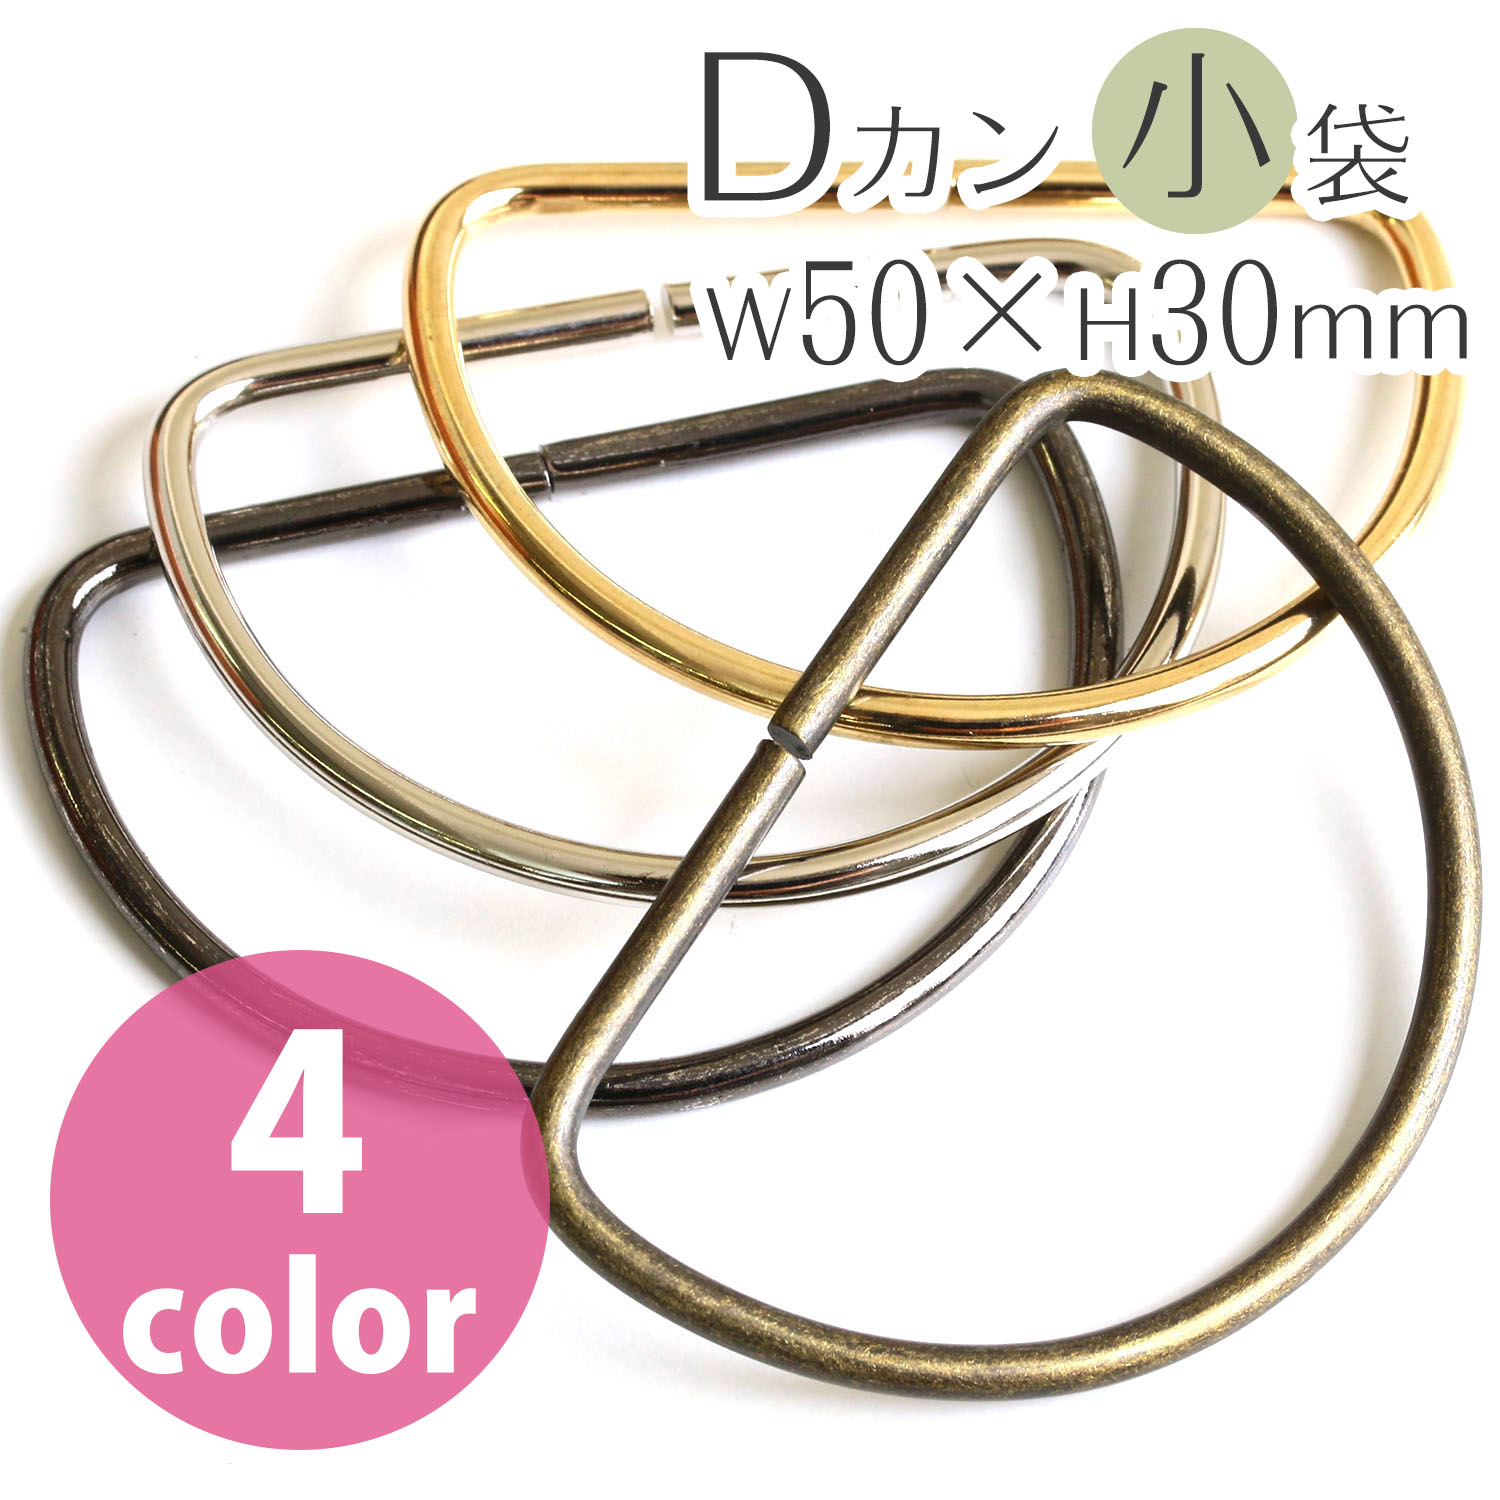 S22 D-Ring  50 x 30mm"", diameter 3mm (bag)